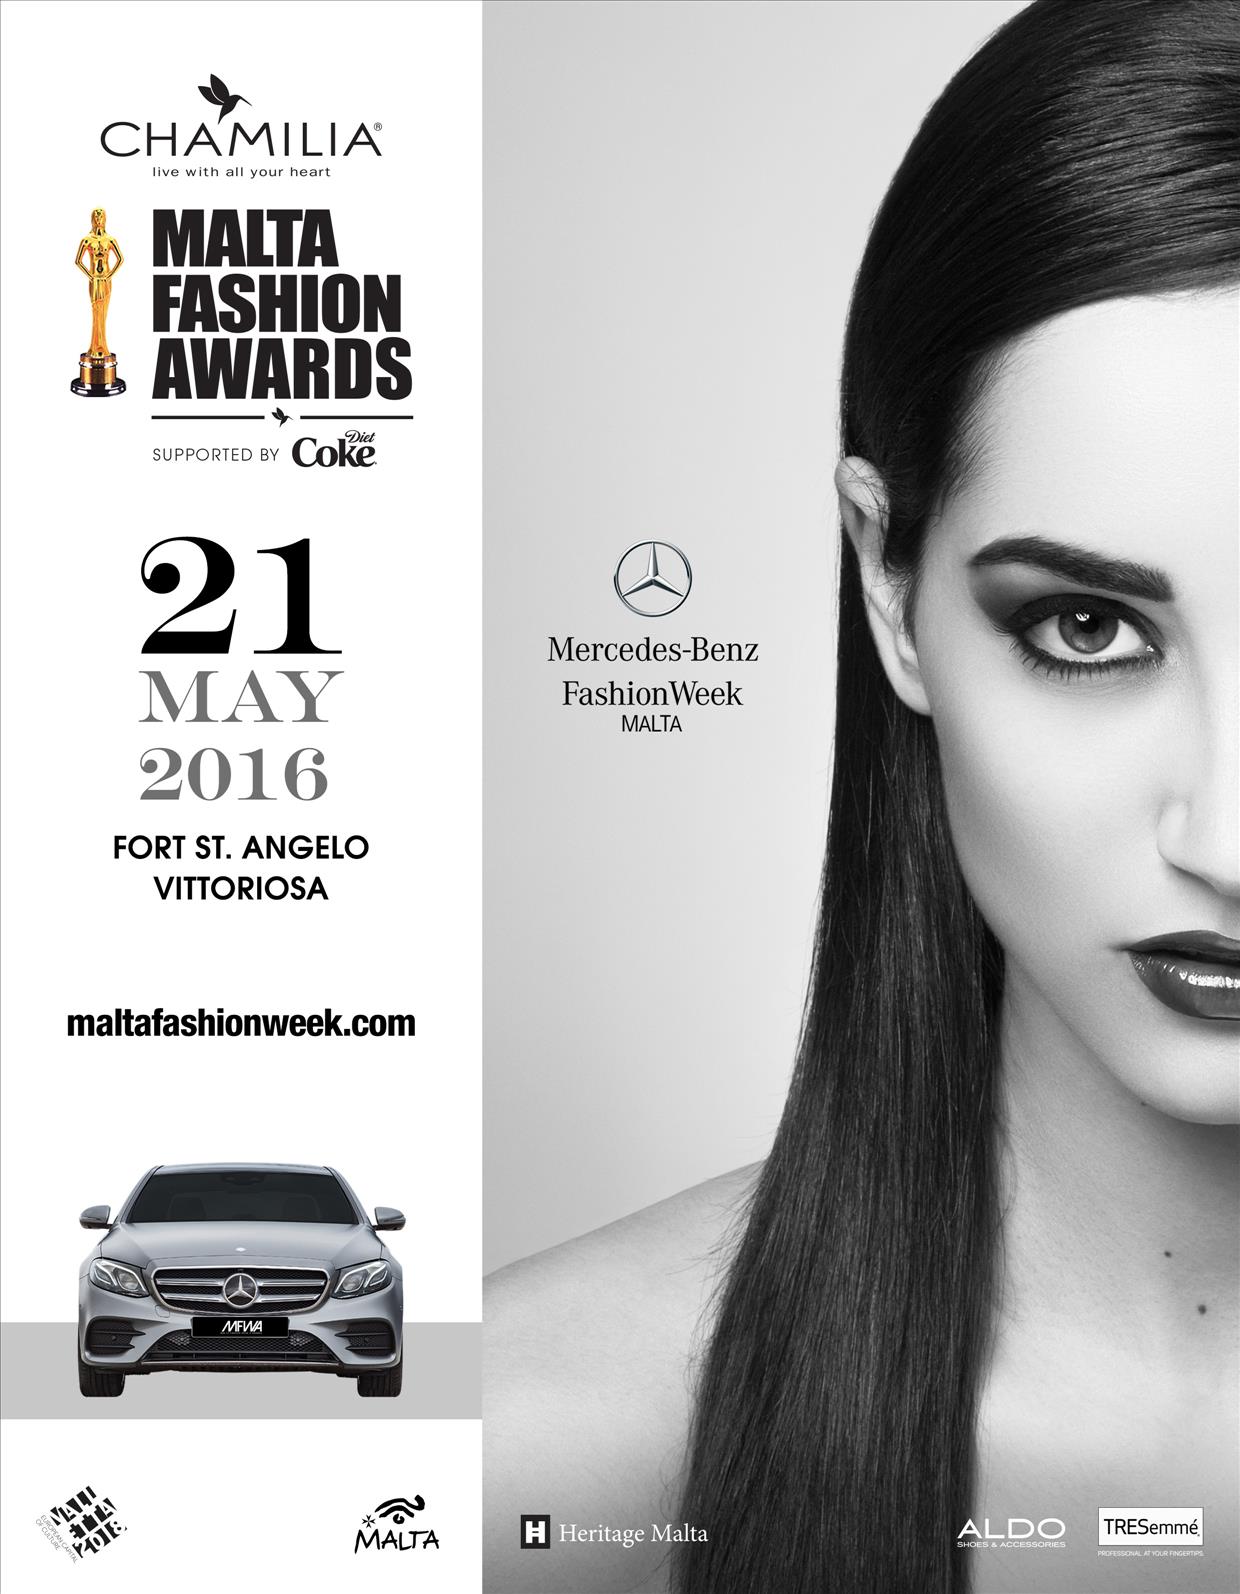 The Chamilia Malta Fashion Awards 2016 poster